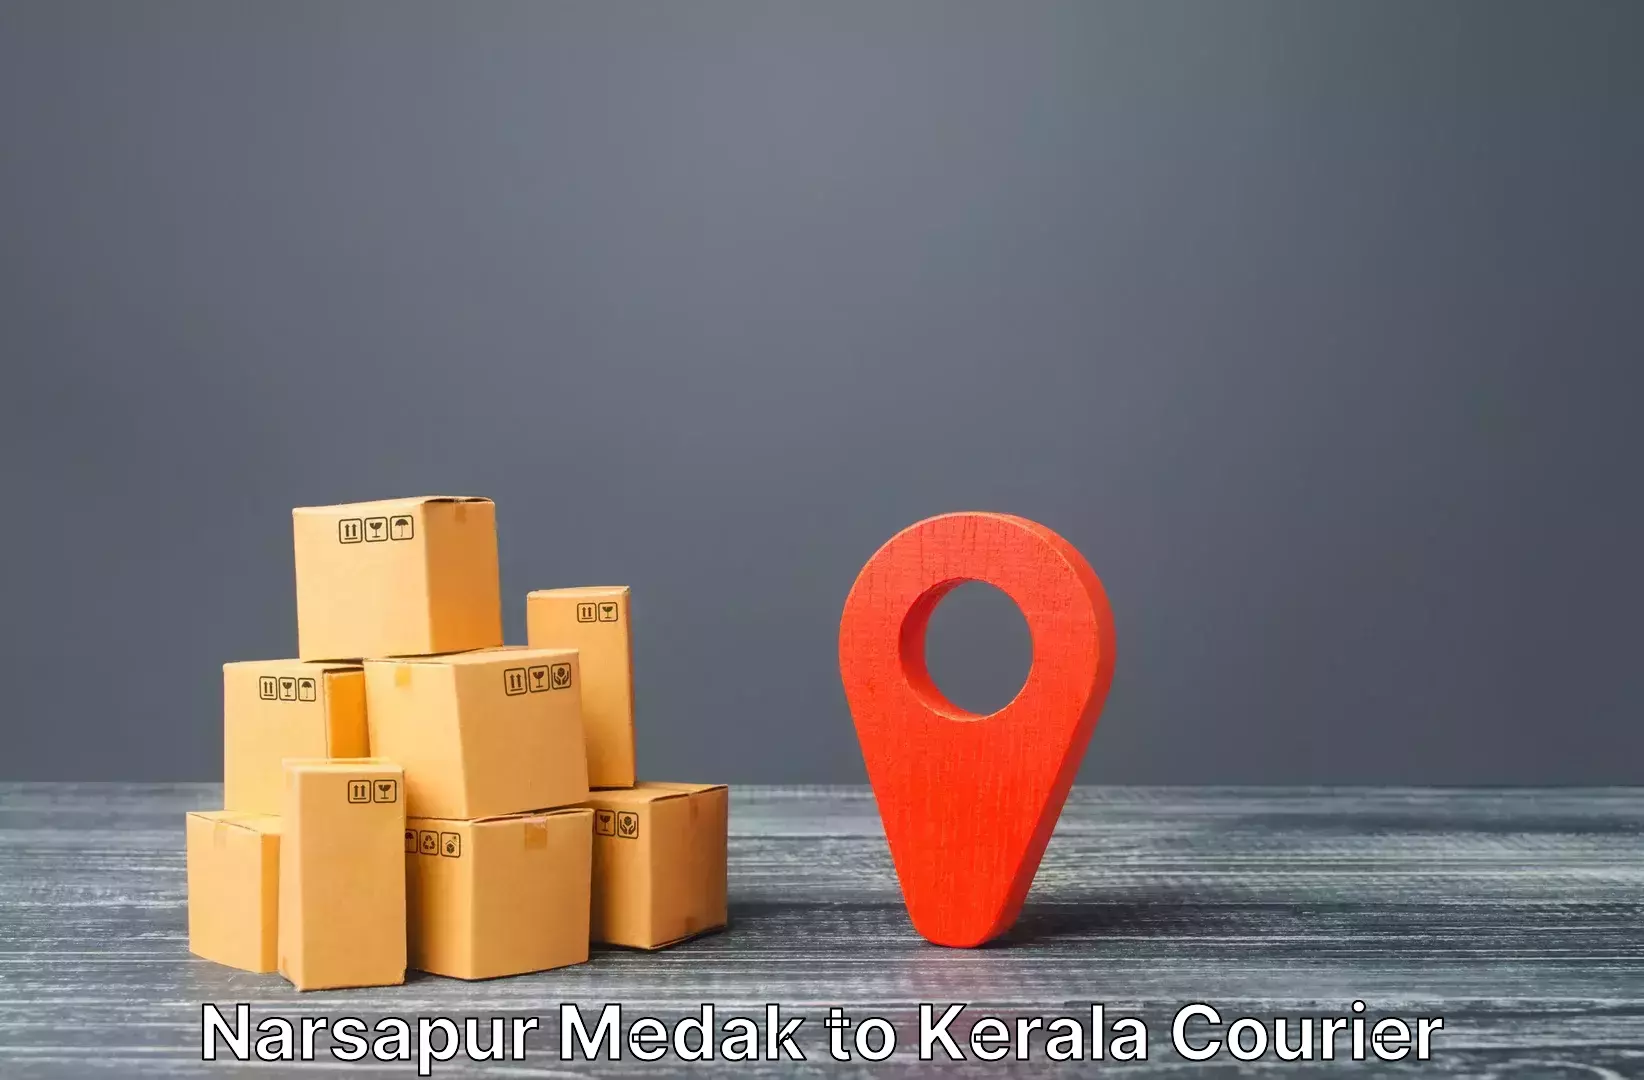 Luggage dispatch service Narsapur Medak to Kochi